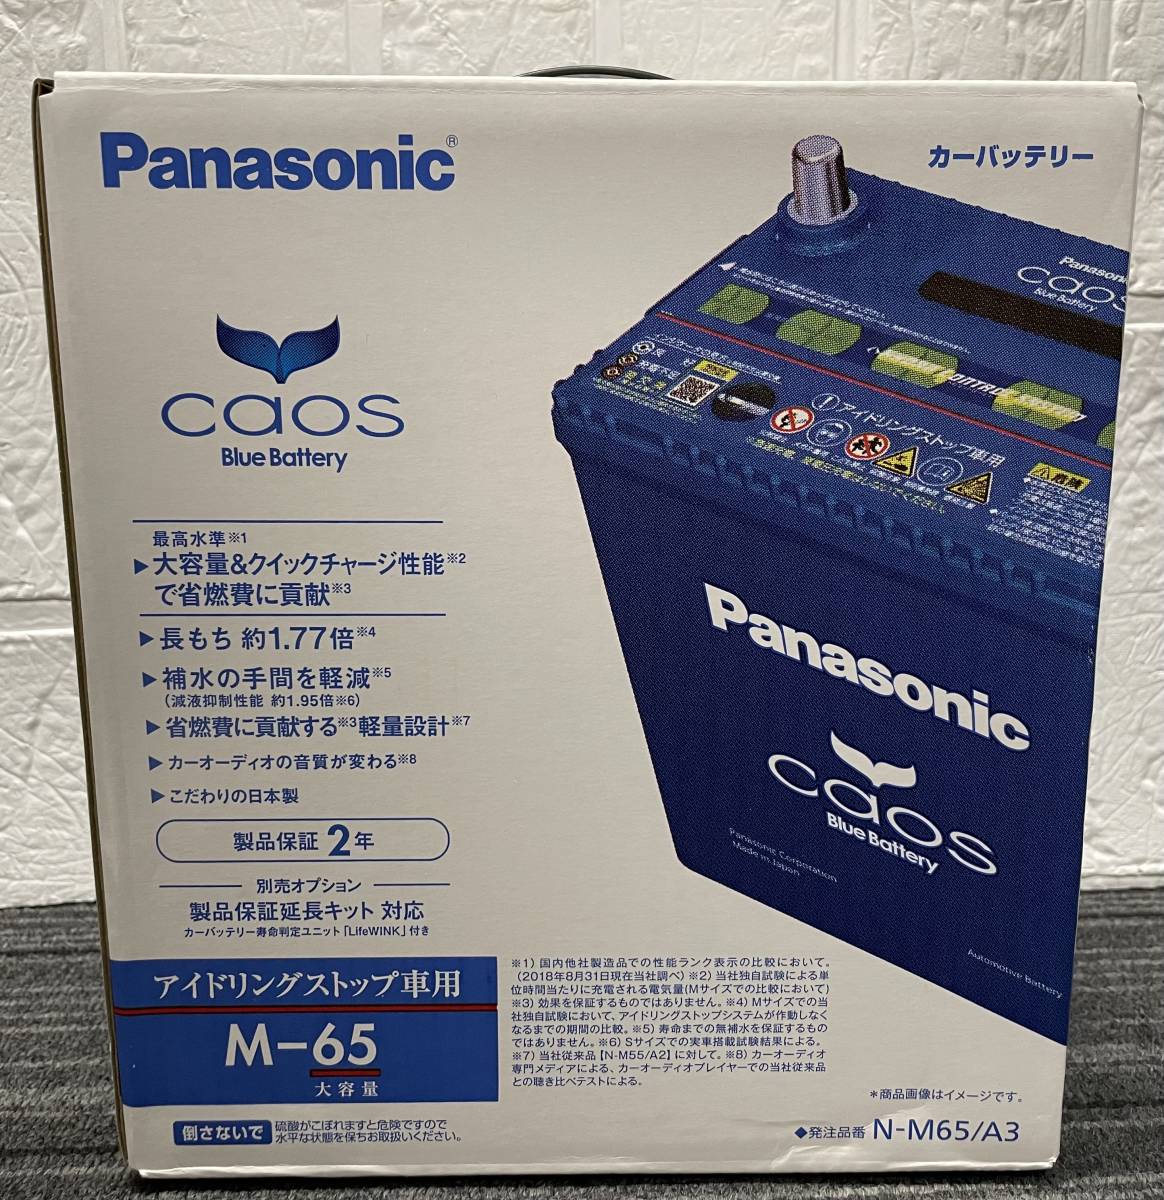  unused Panasonic Panasonic caos Chaos N-M65/A3 idling Stop car battery attention 99 jpy start 